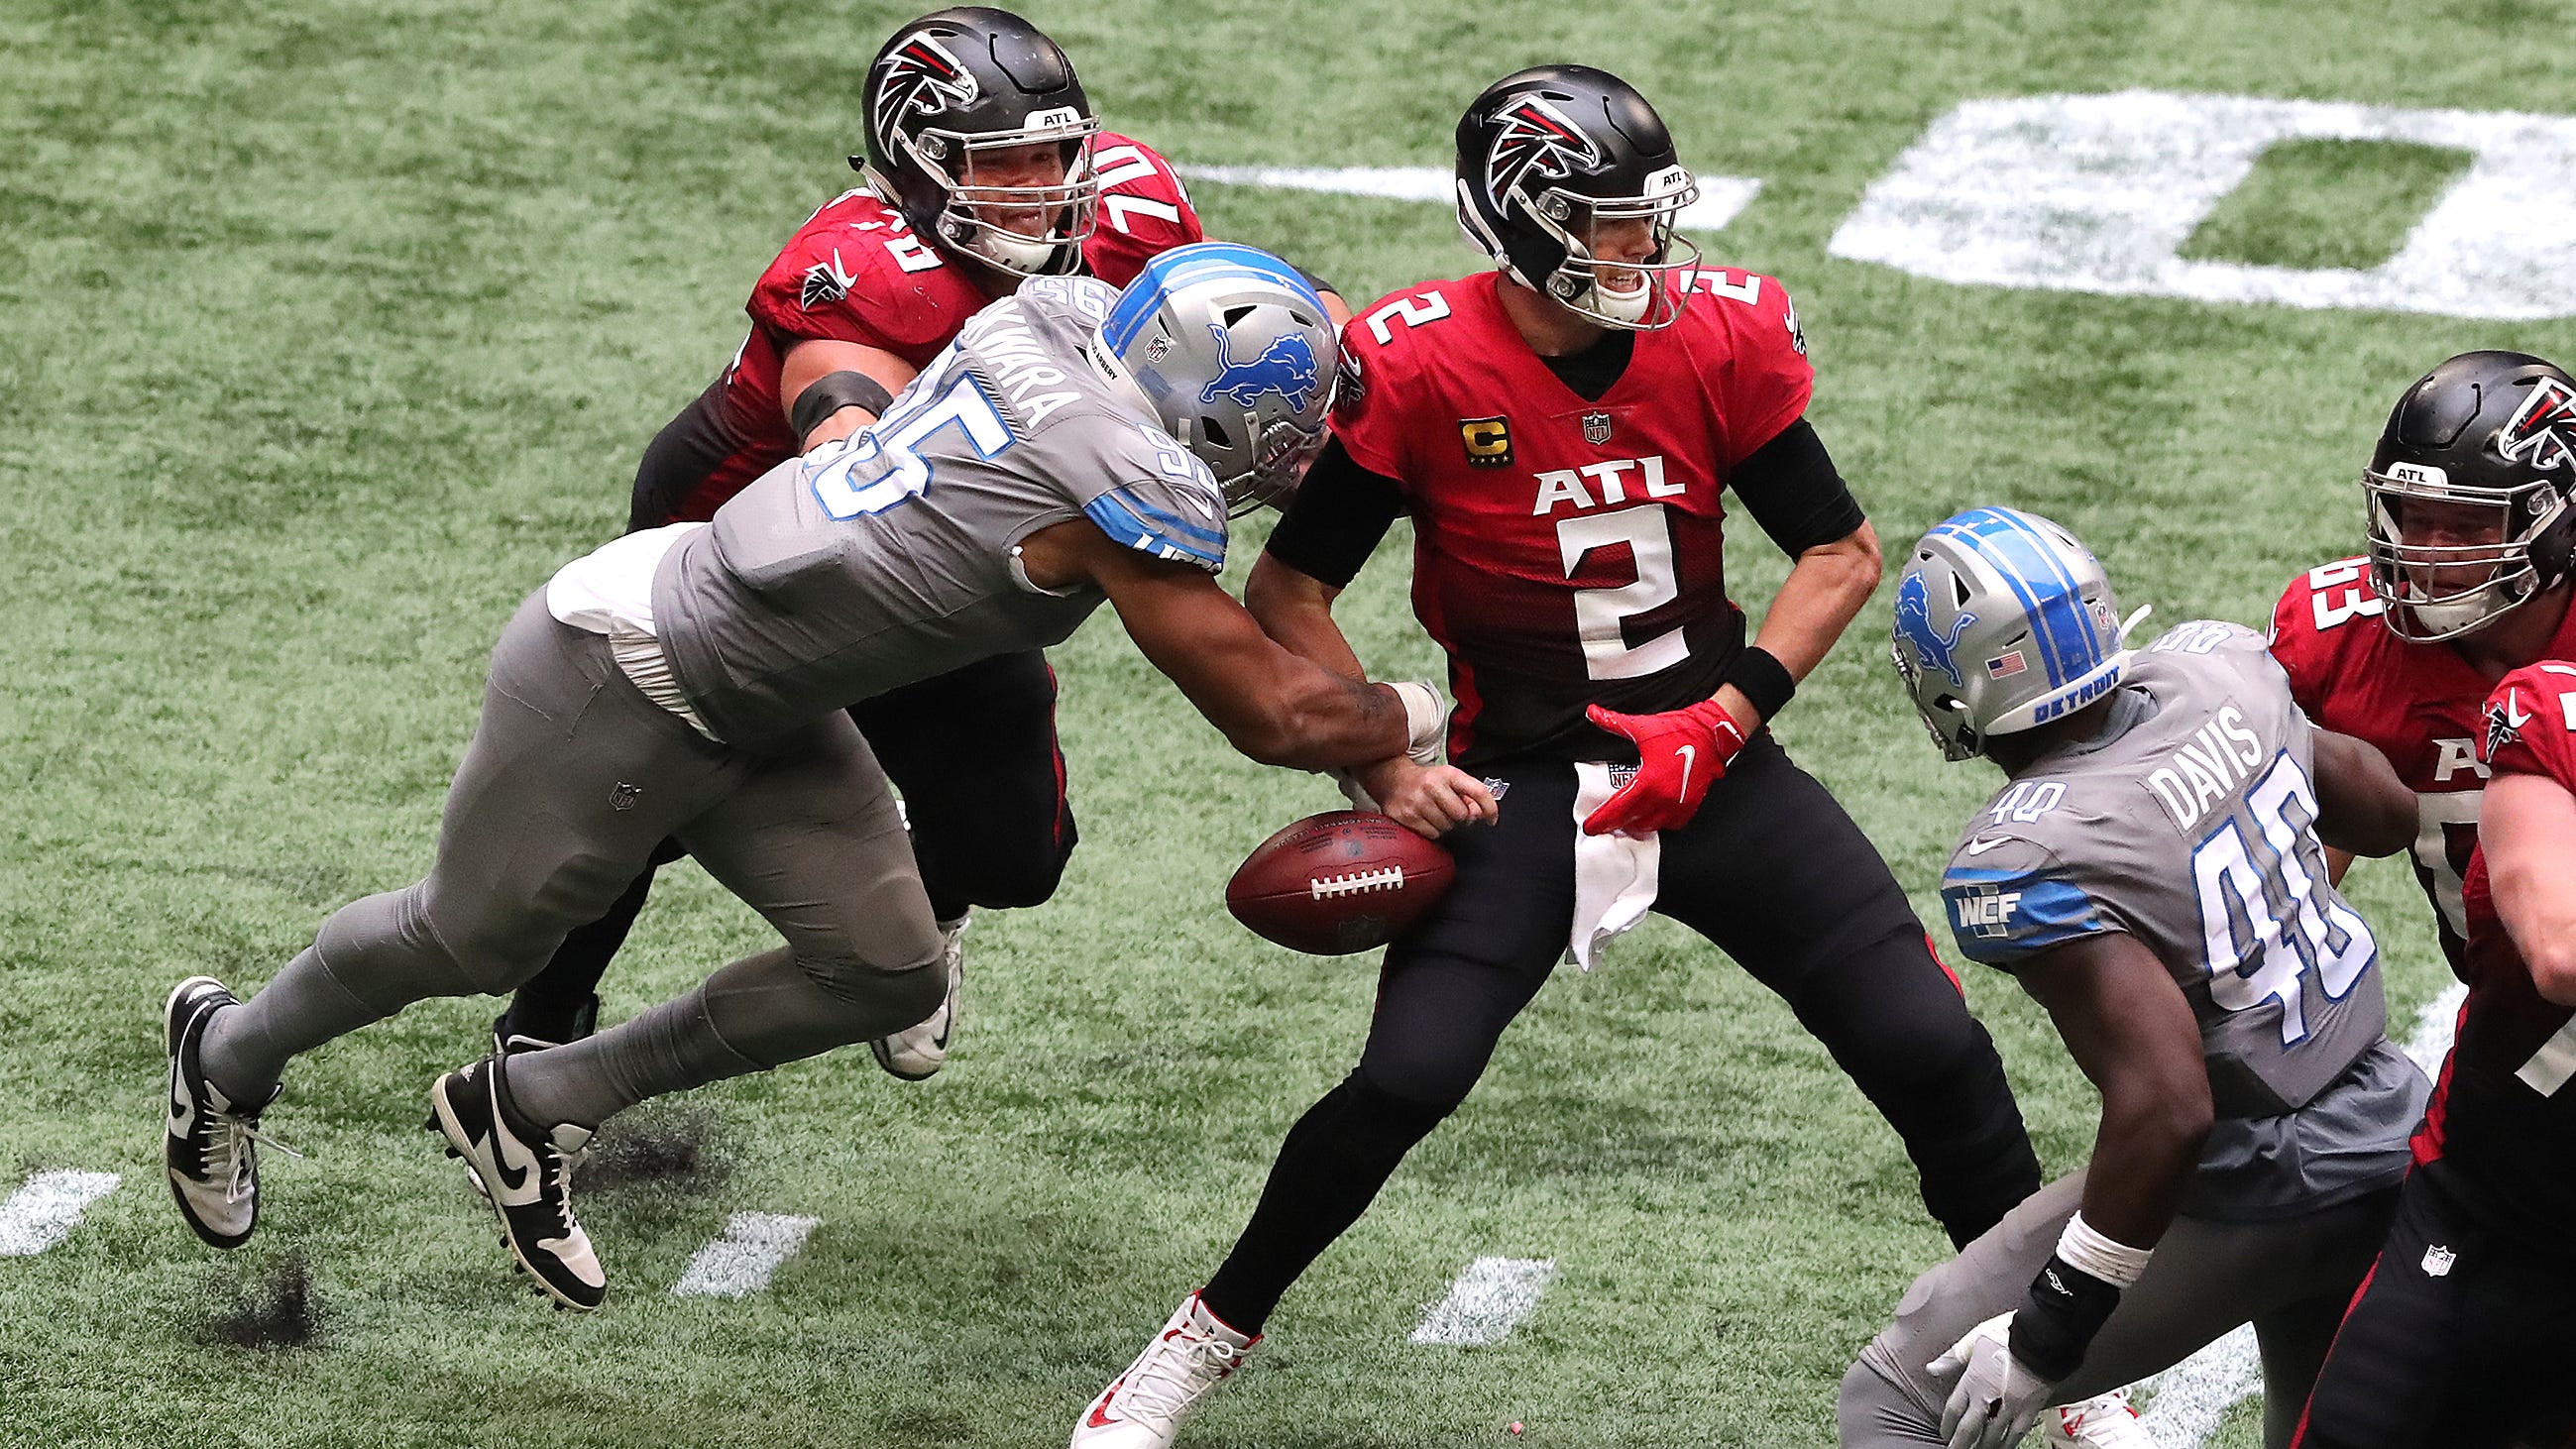 Lions defensive end Romeo Okwara strips the ball from Falcons quarterback Matt Ryan during the fourth quarter.